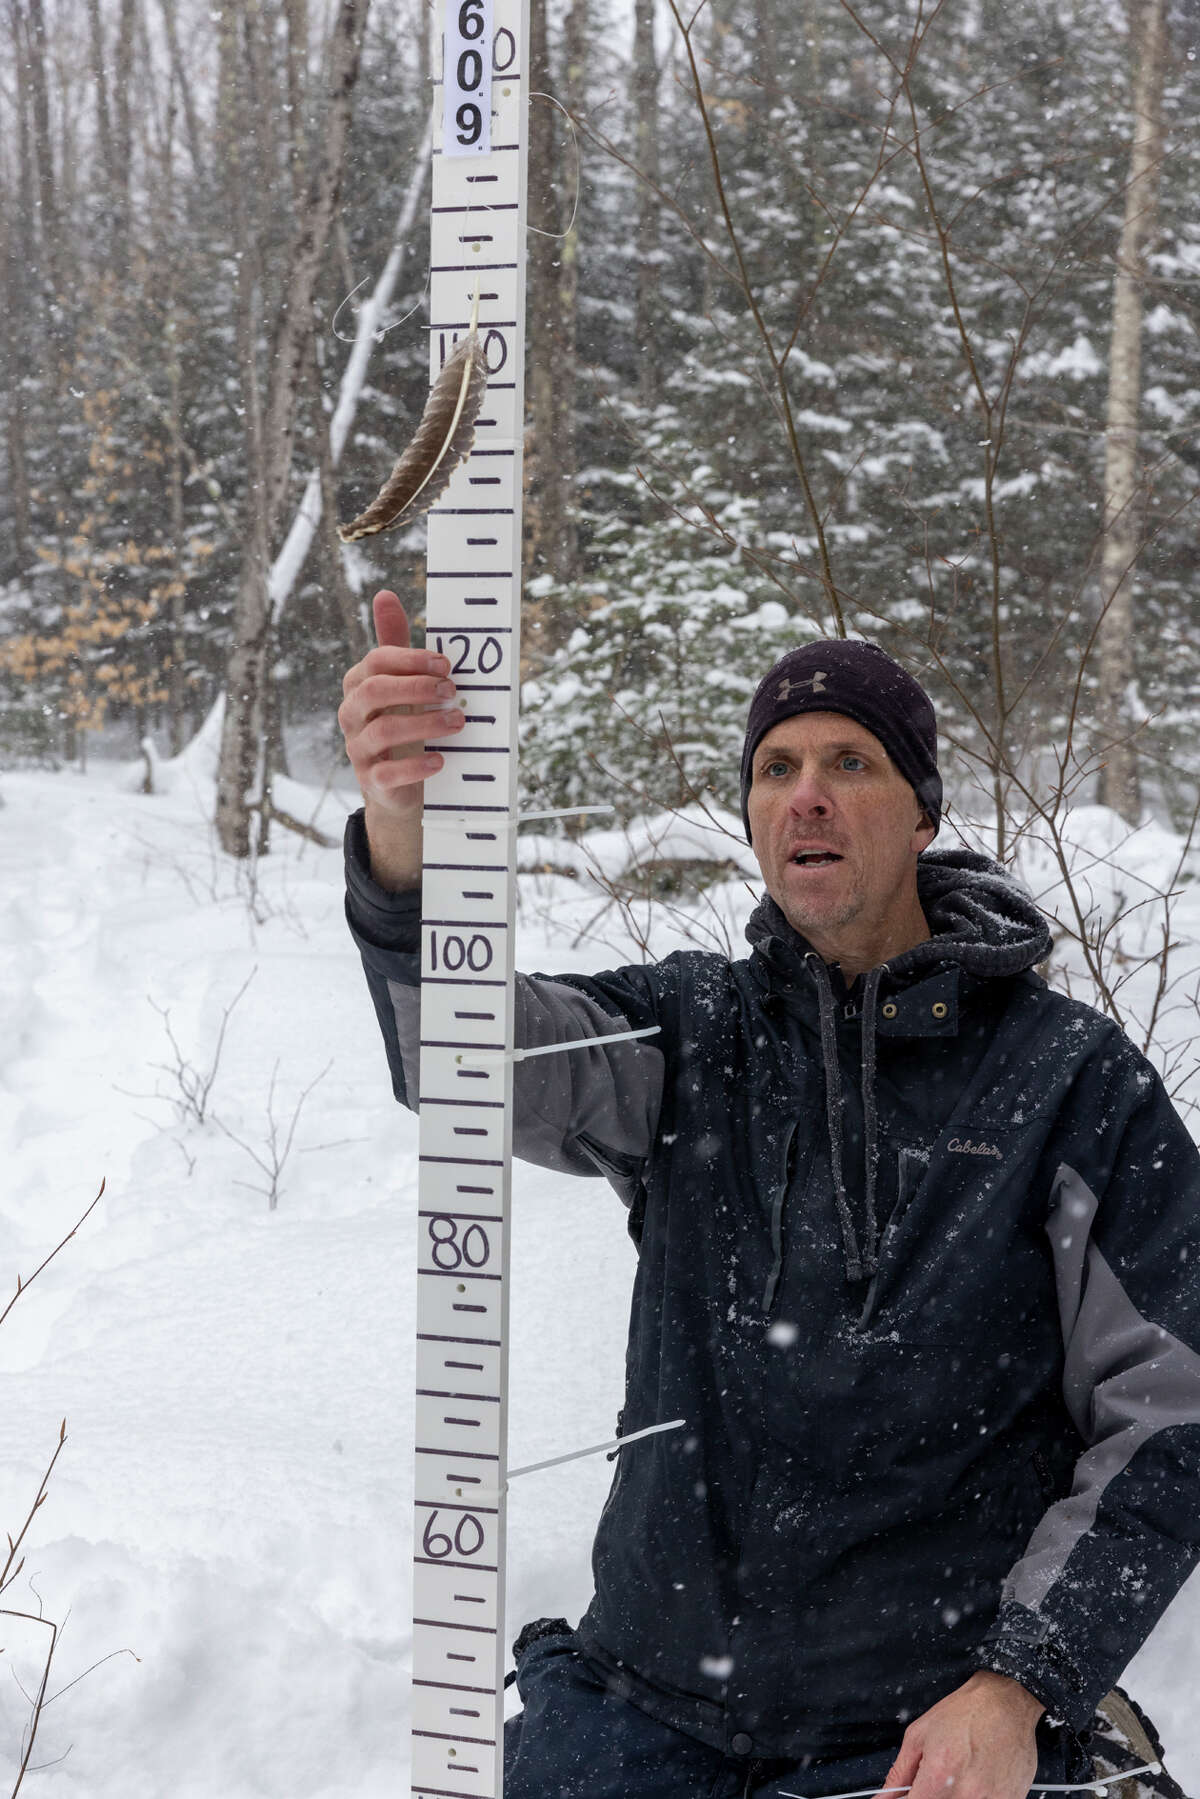 DEC senior wildlife biologist and SUNY ESF adjunct profession Paul Jensen sets up a snow depth measuring stick in the woods outside Lake Placid. 